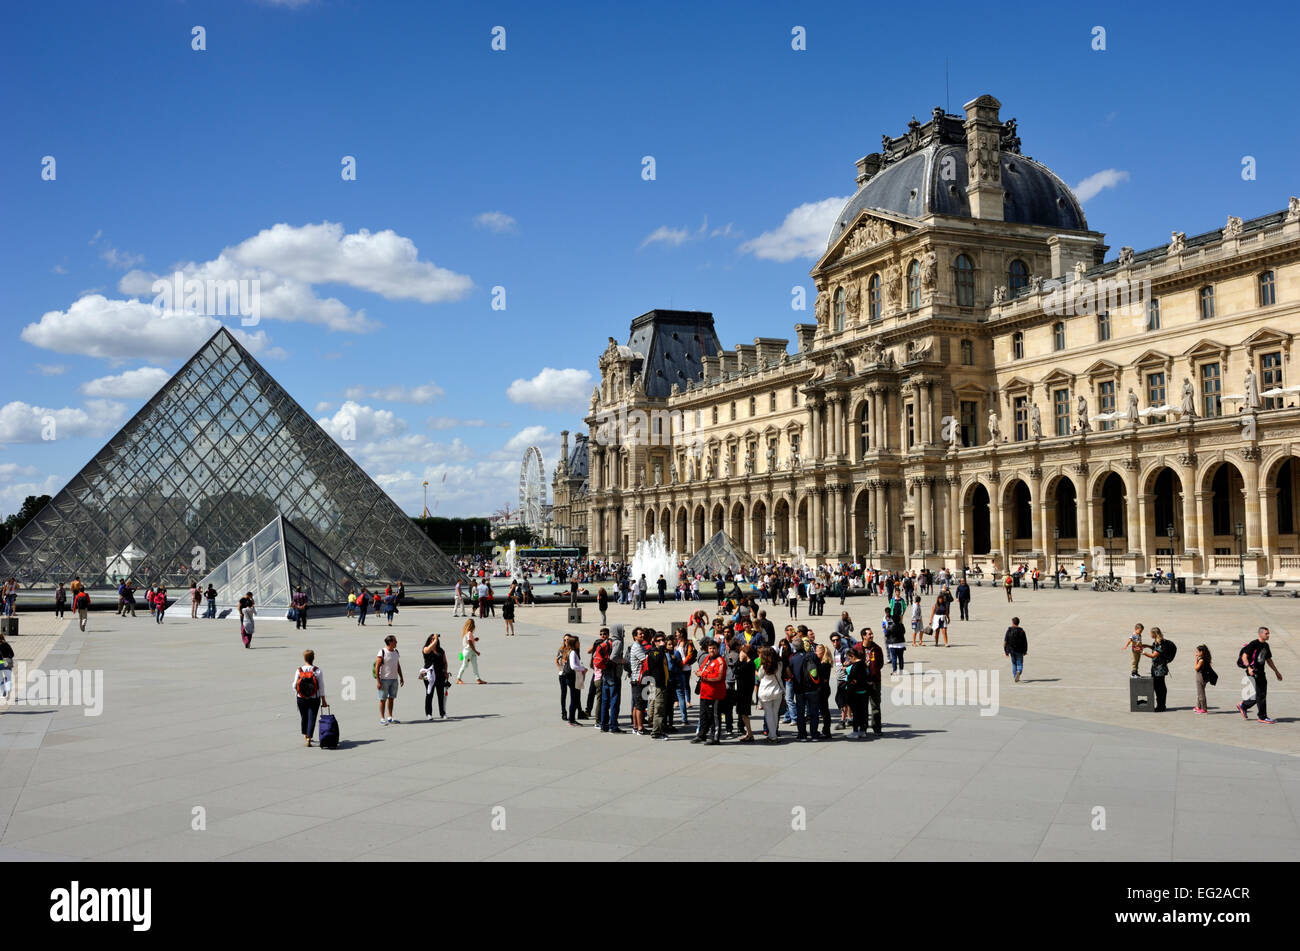 Paris, Louvre museum and pyramid Stock Photo